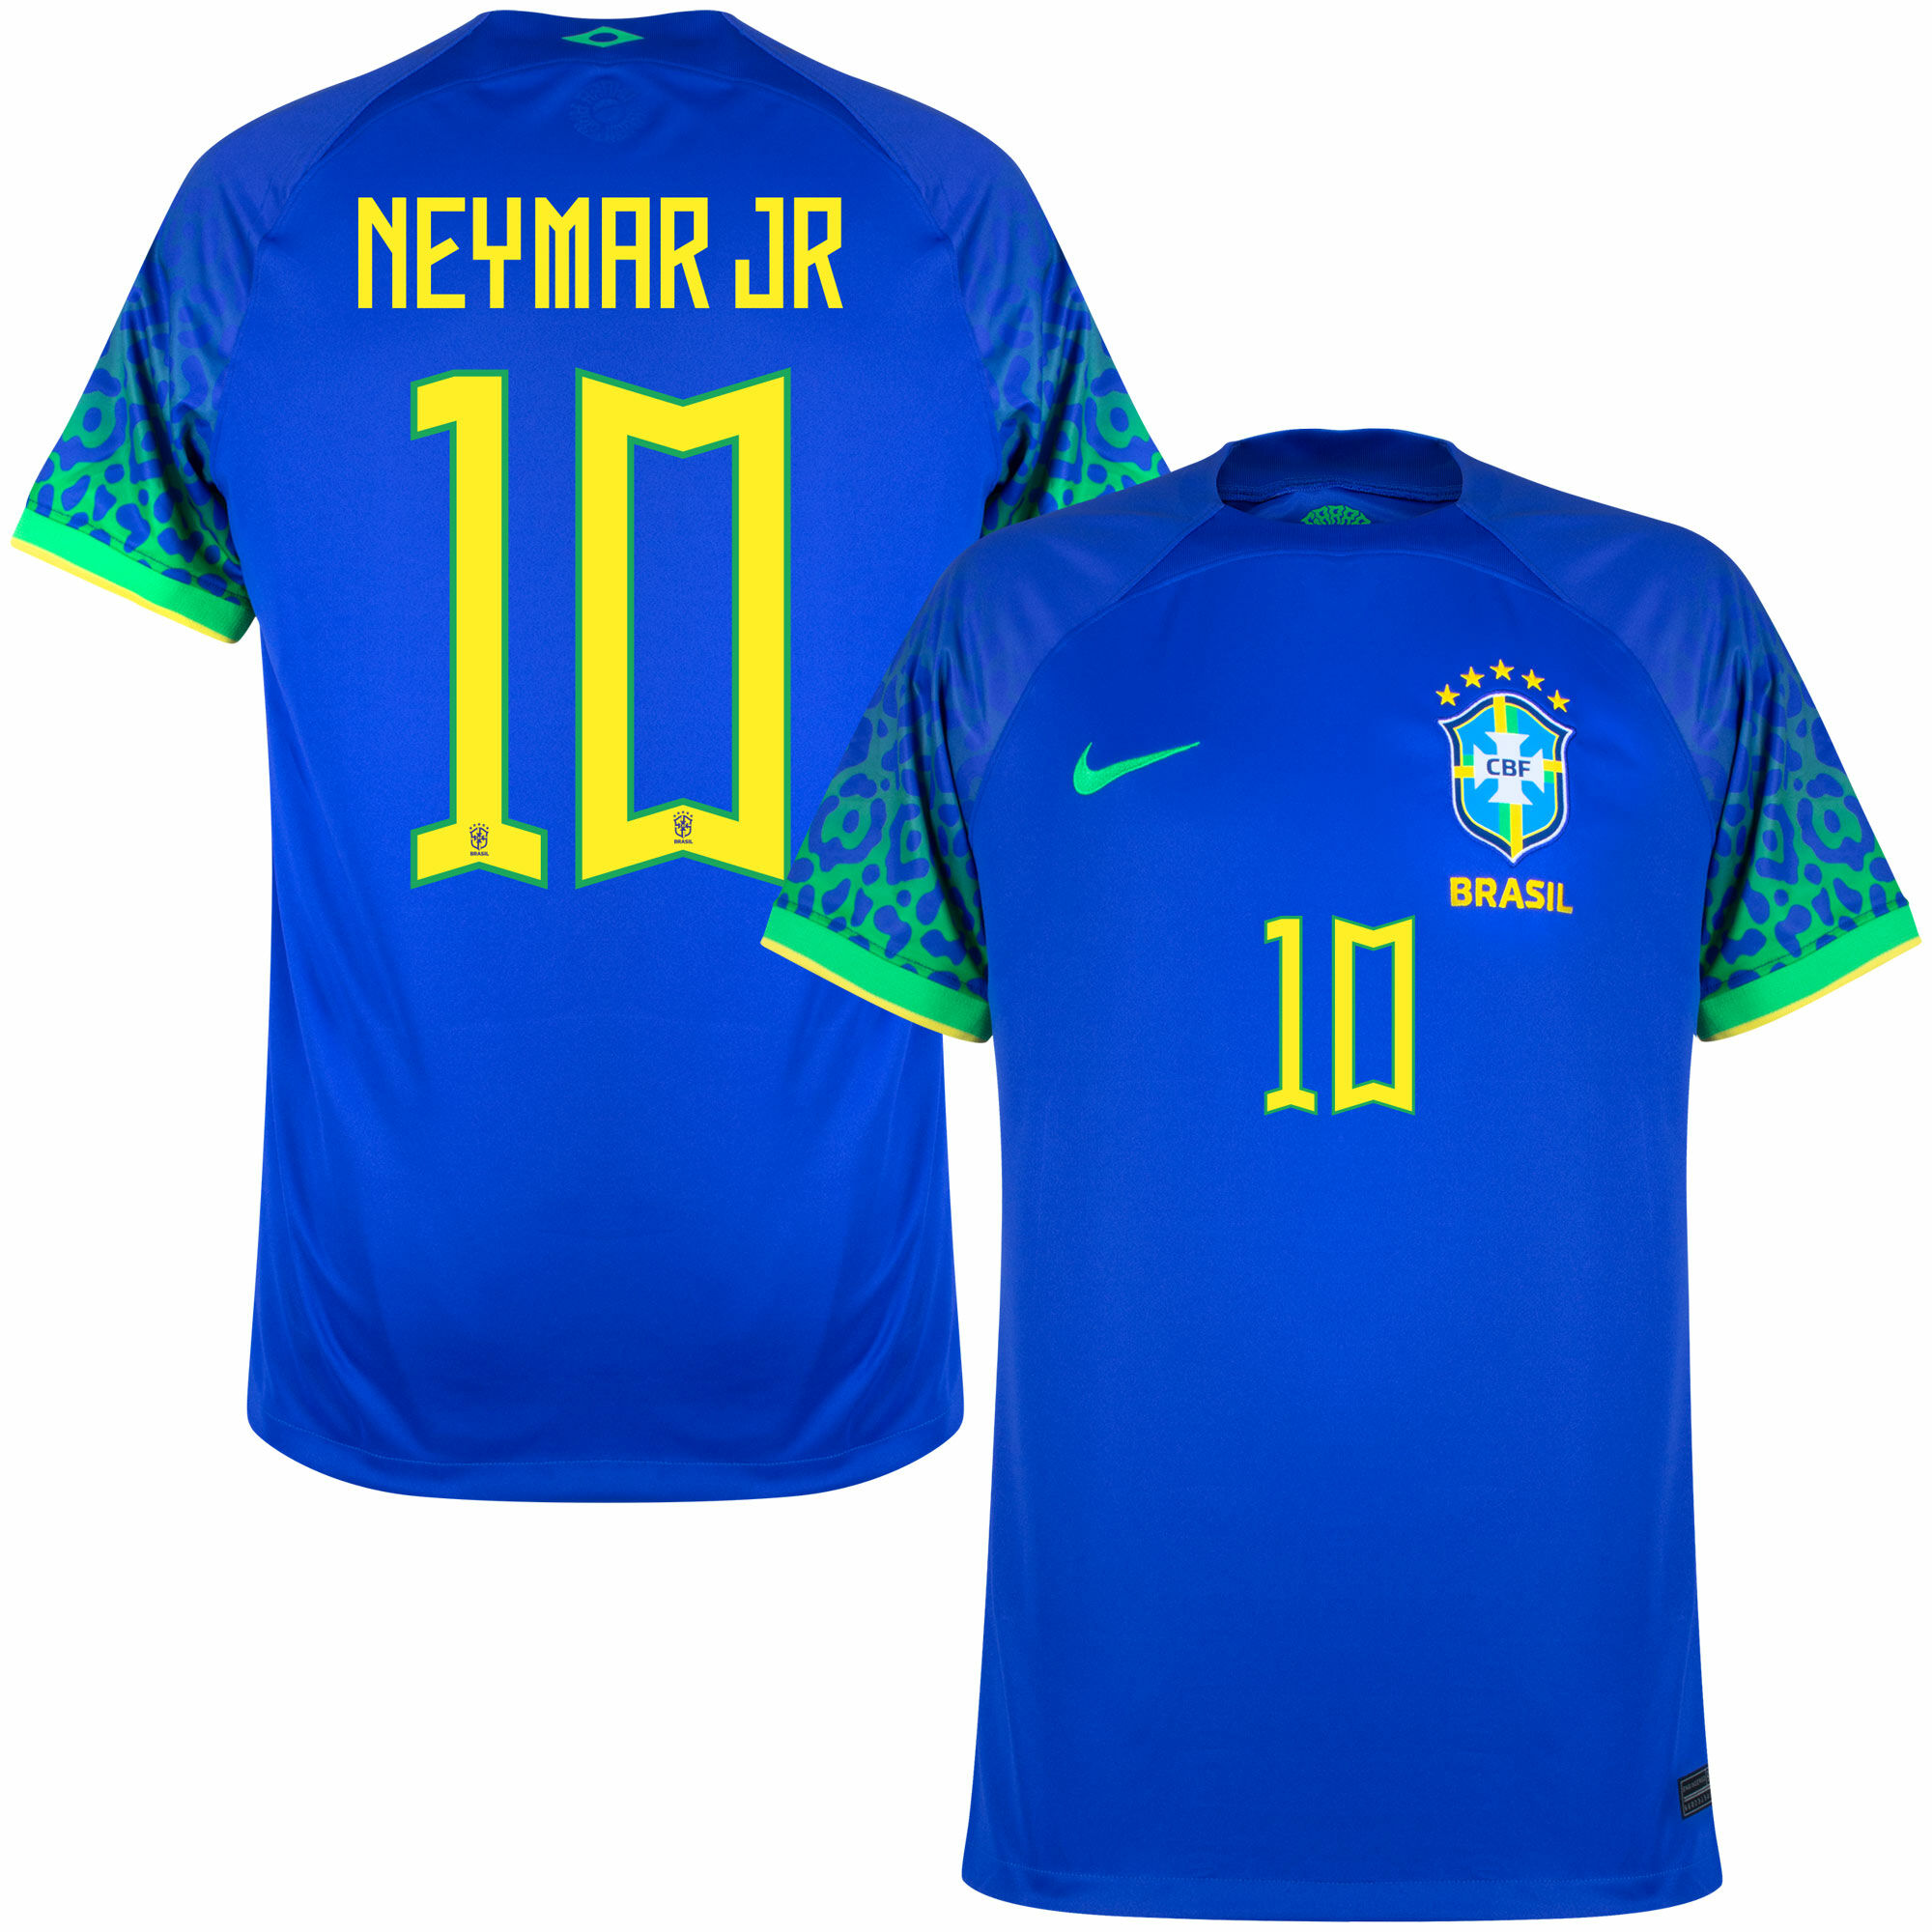 Camiseta Neymar Jr – Aged Archive